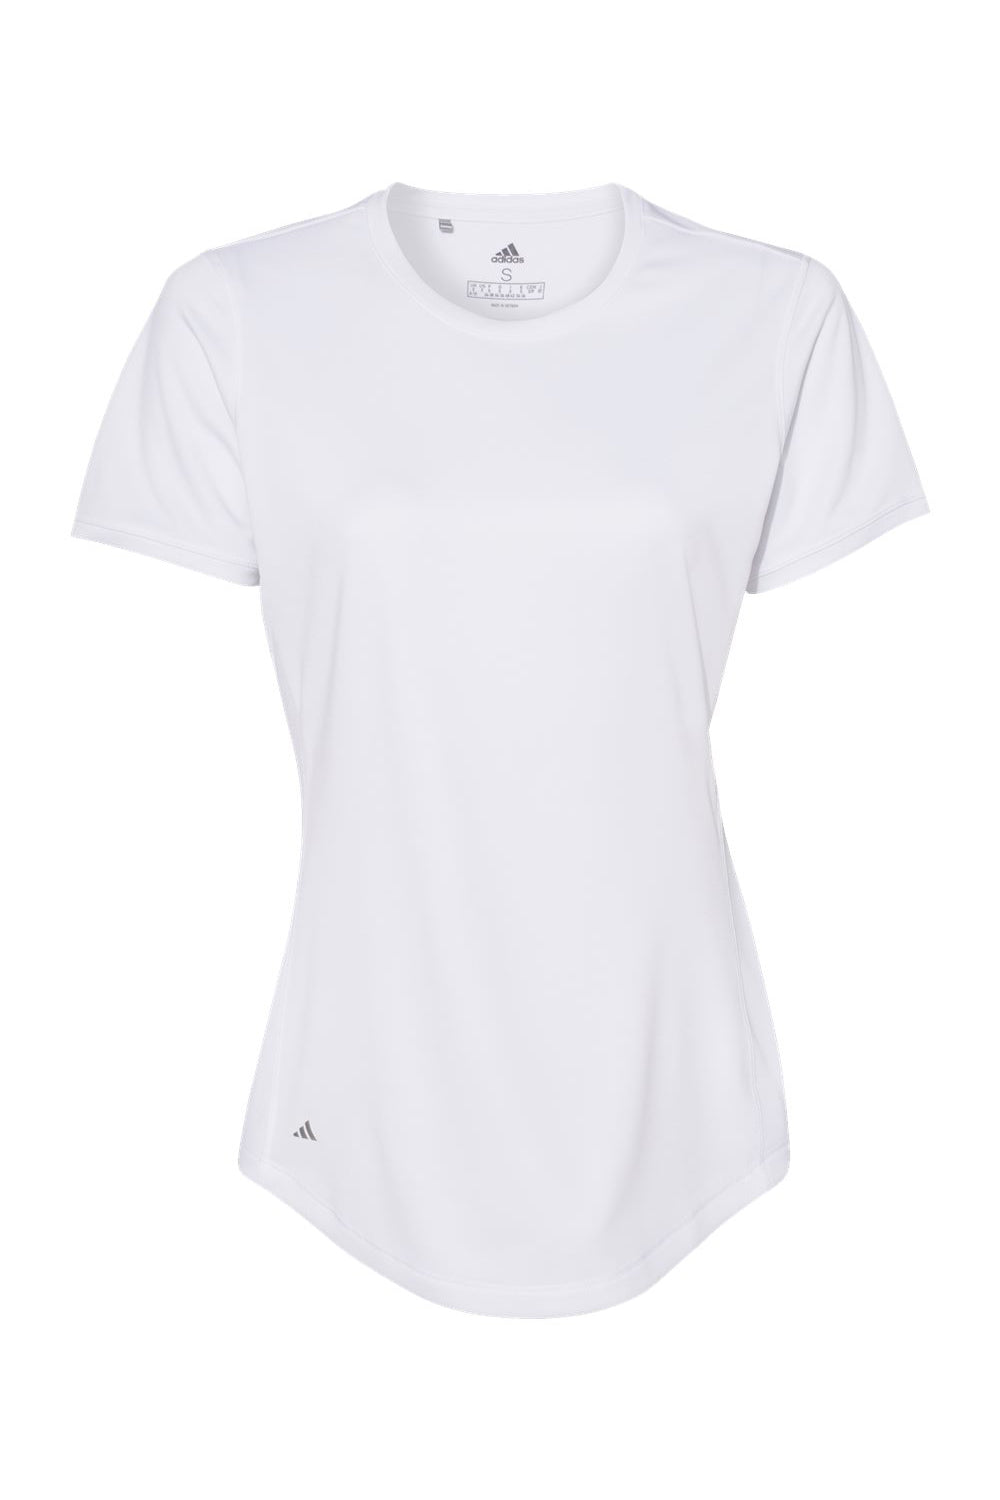 Adidas A377 Womens UPF 50+ Short Sleeve Crewneck T-Shirt White Flat Front